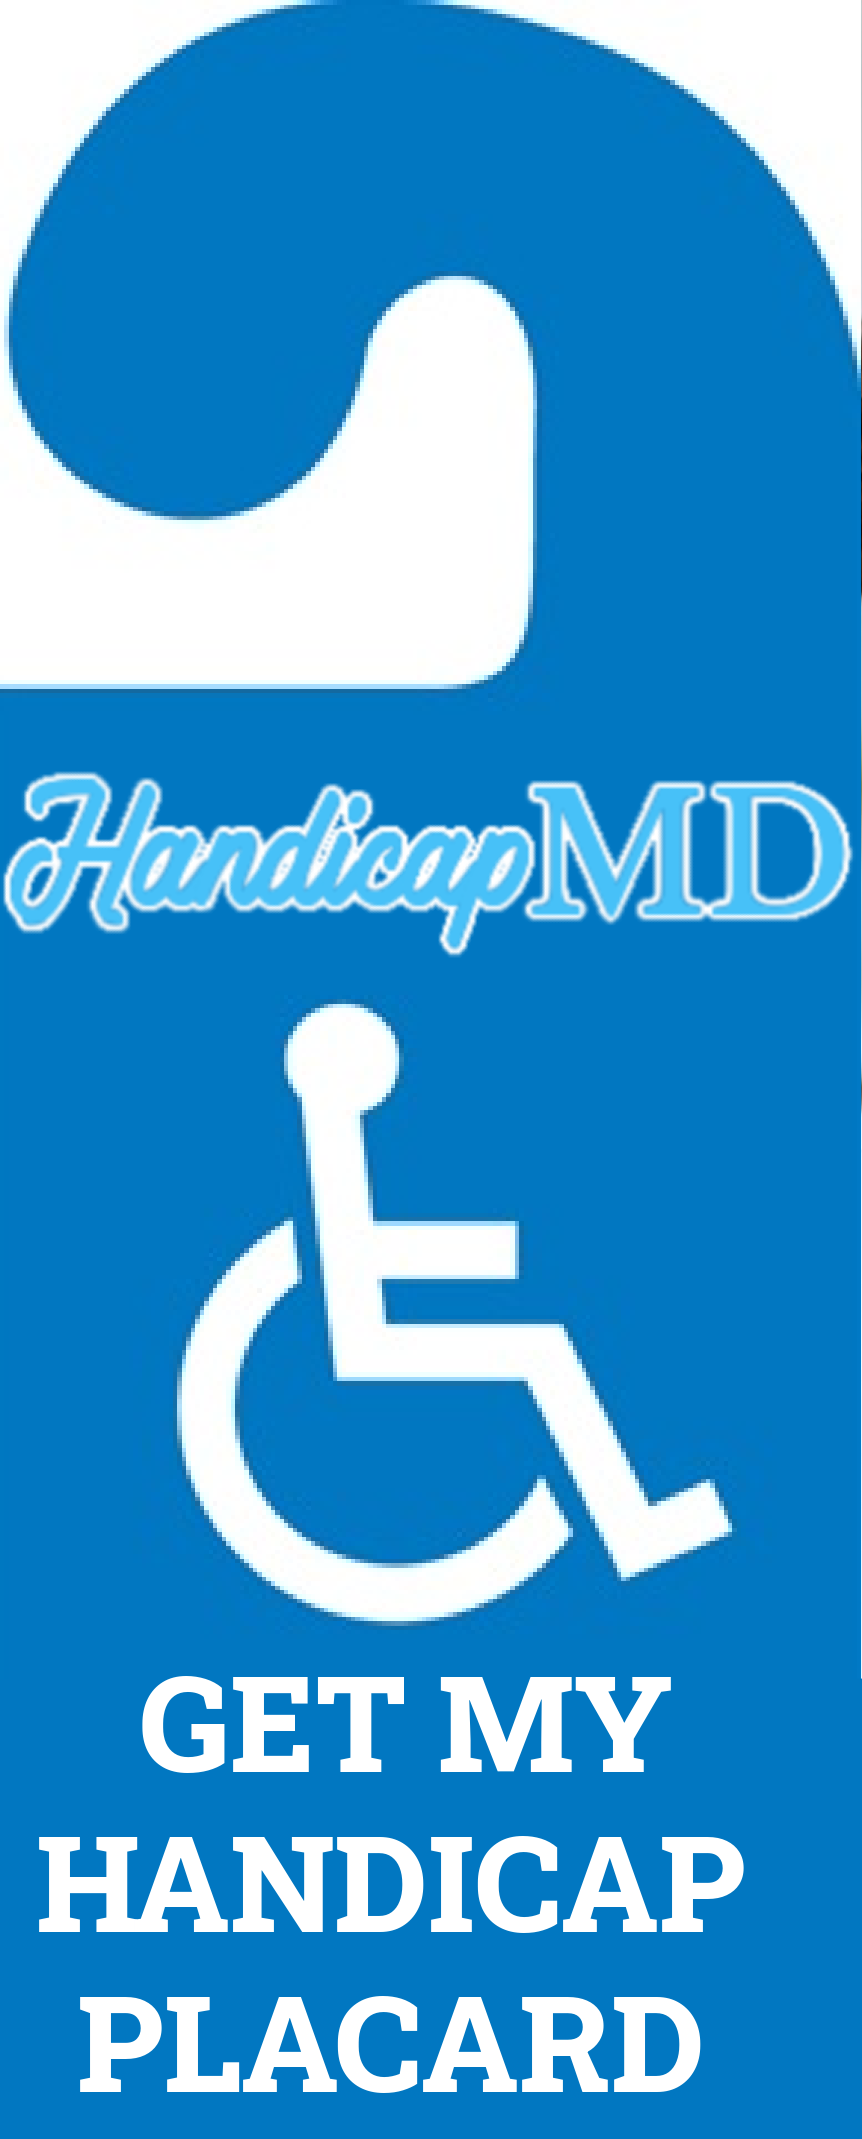 Louisiana Handicap Parking Placards